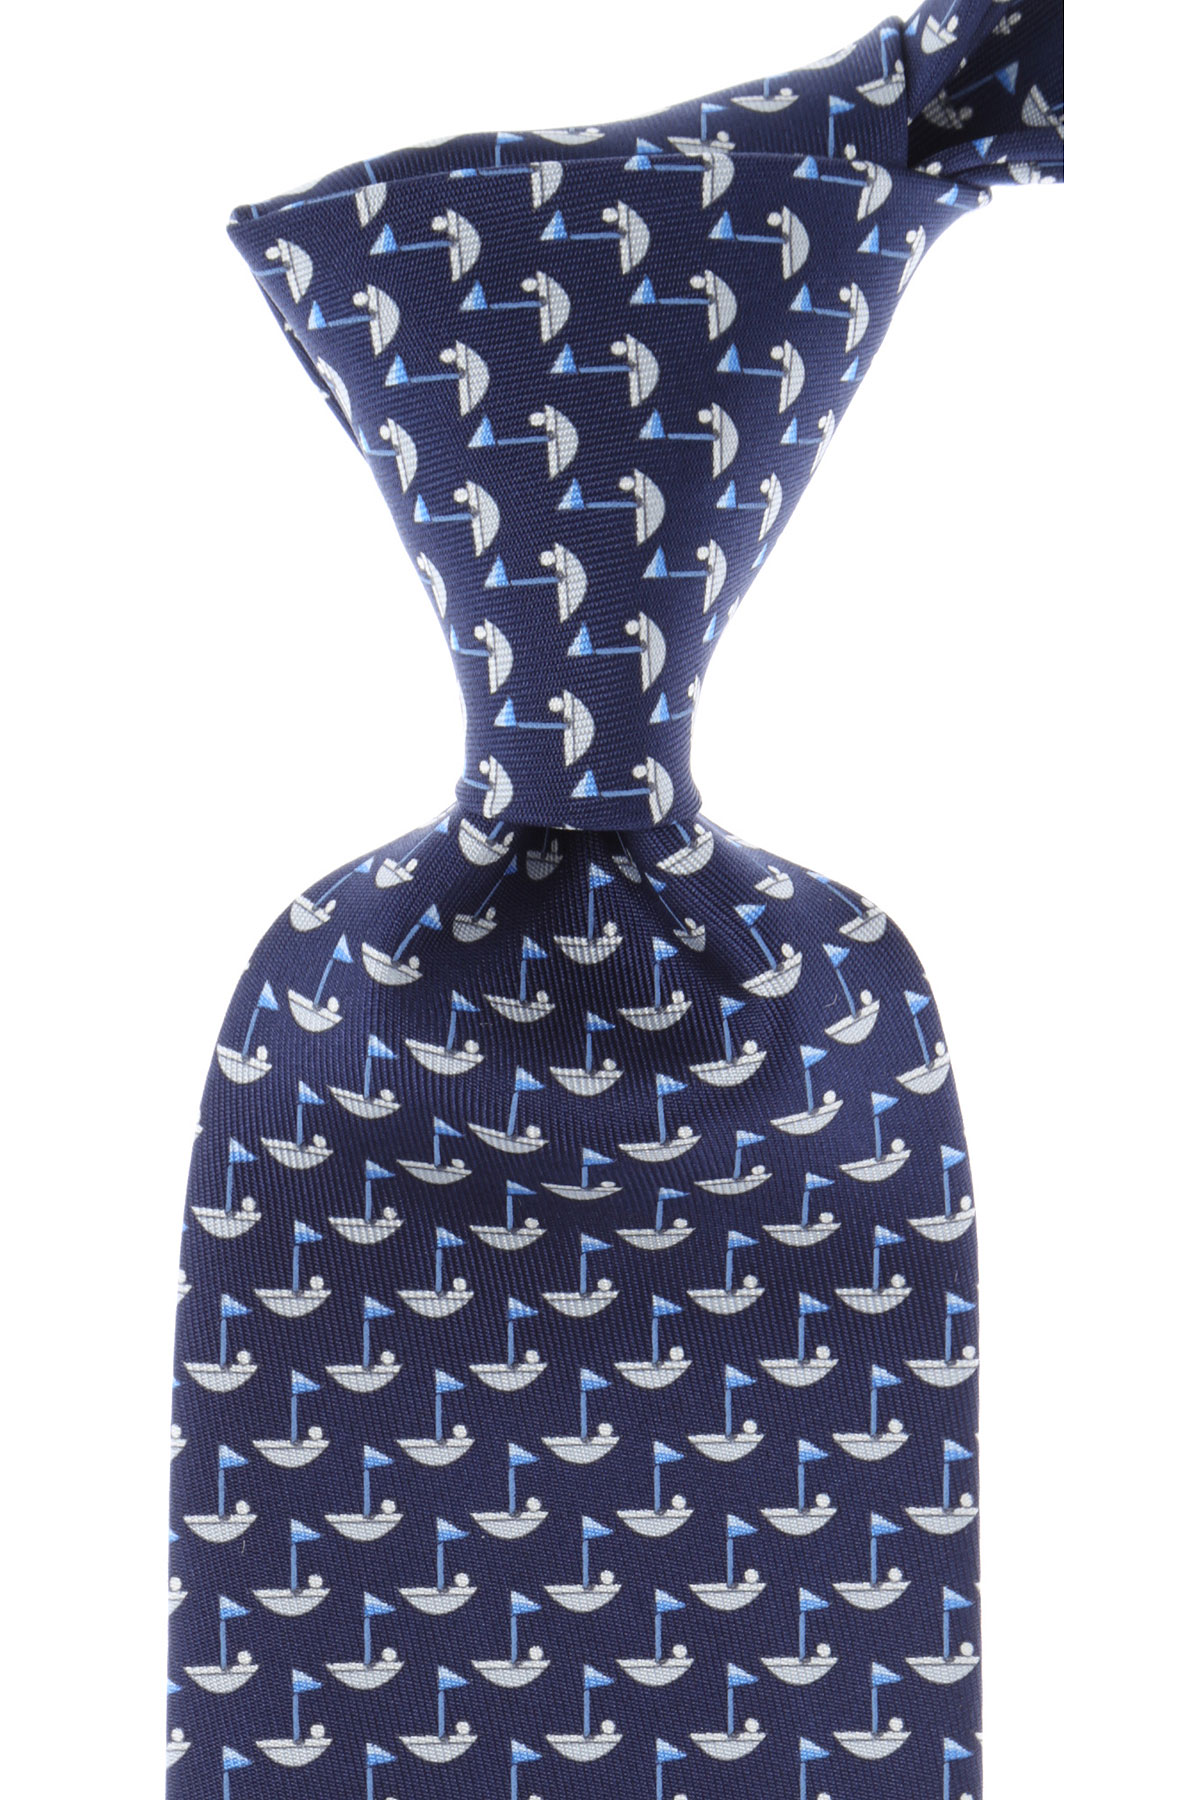 Cravates Ferragamo , Bleu marine foncé, Soie, 2017